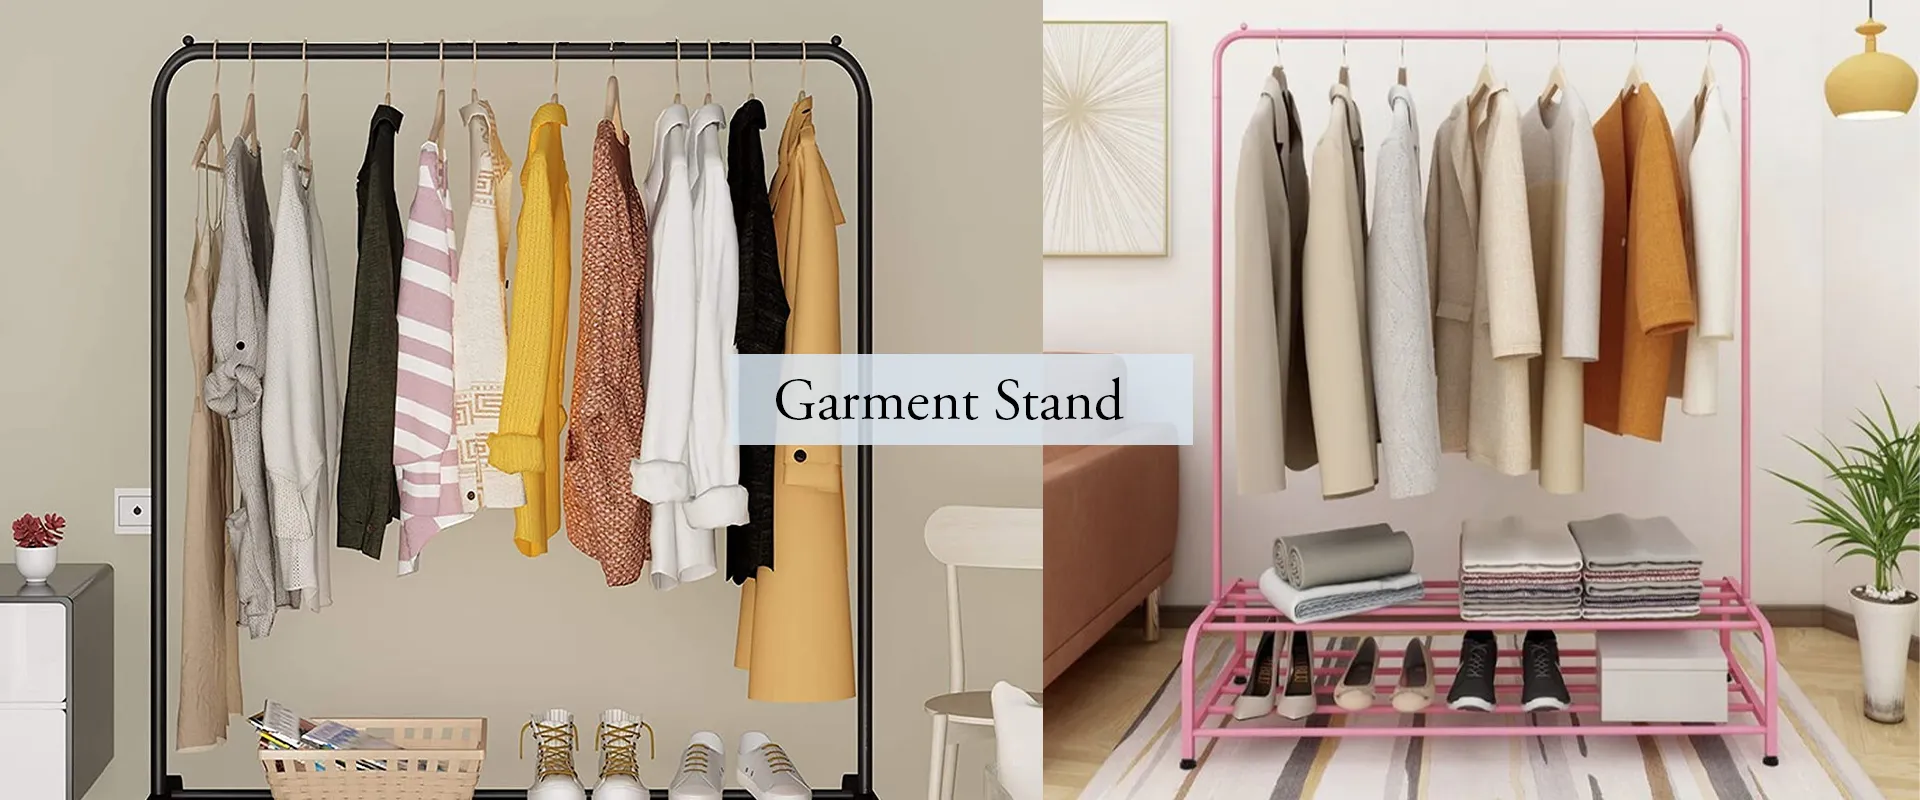 Garment Stand